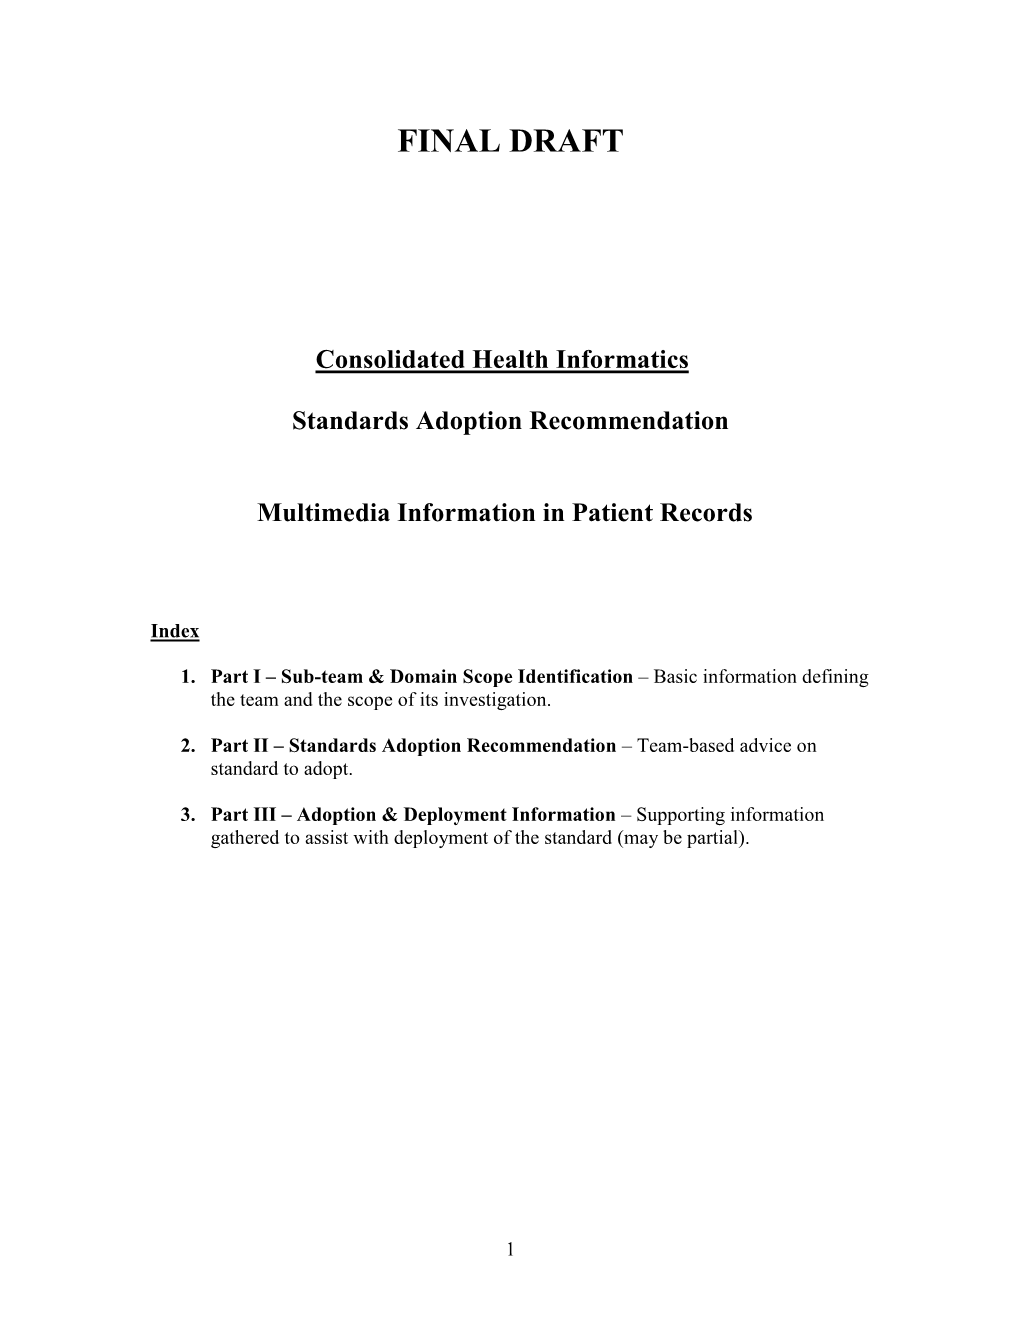 Consolidated Health Informatics Standards Adoption